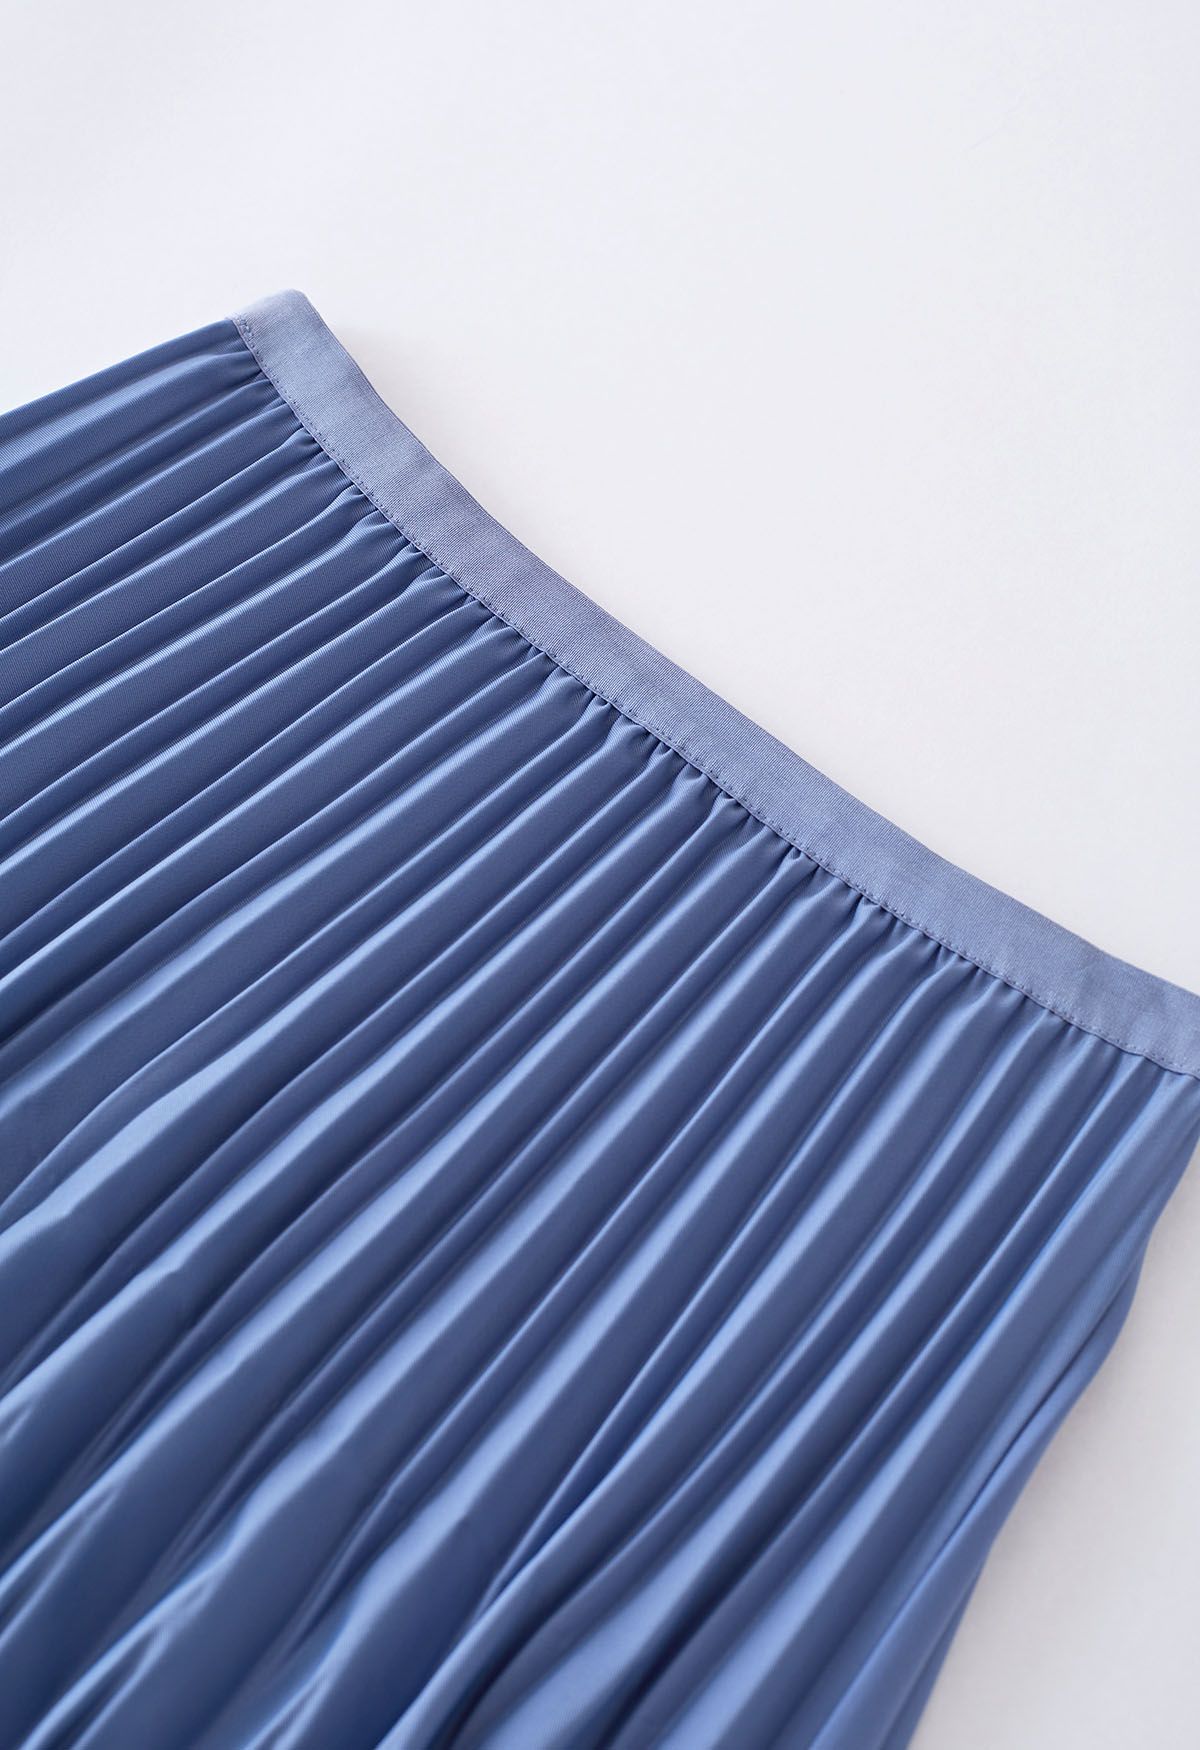 Irregular Pleated Midi Skirt in Dusty Blue